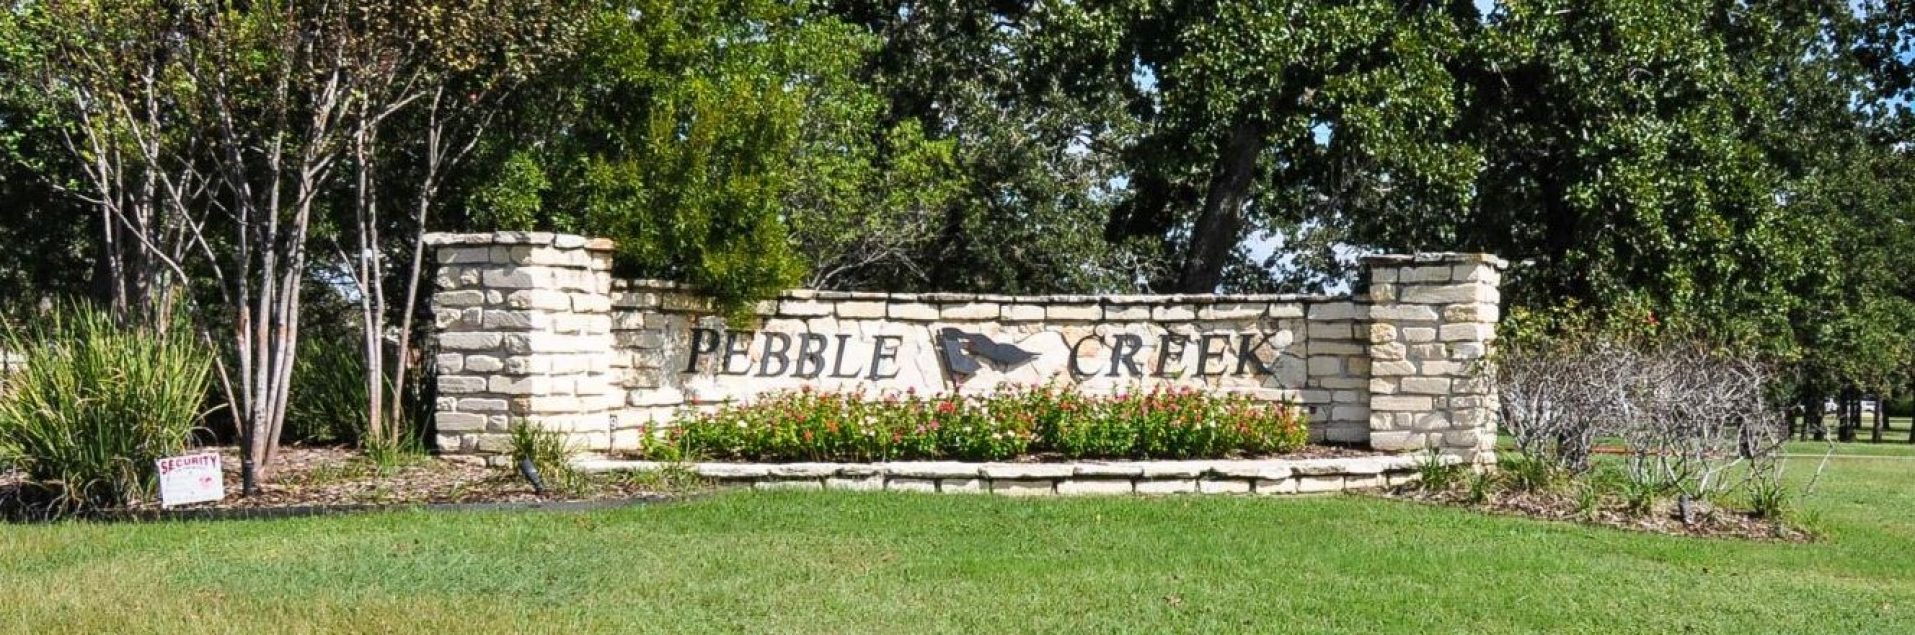 pebble-creek-homes-for-sale